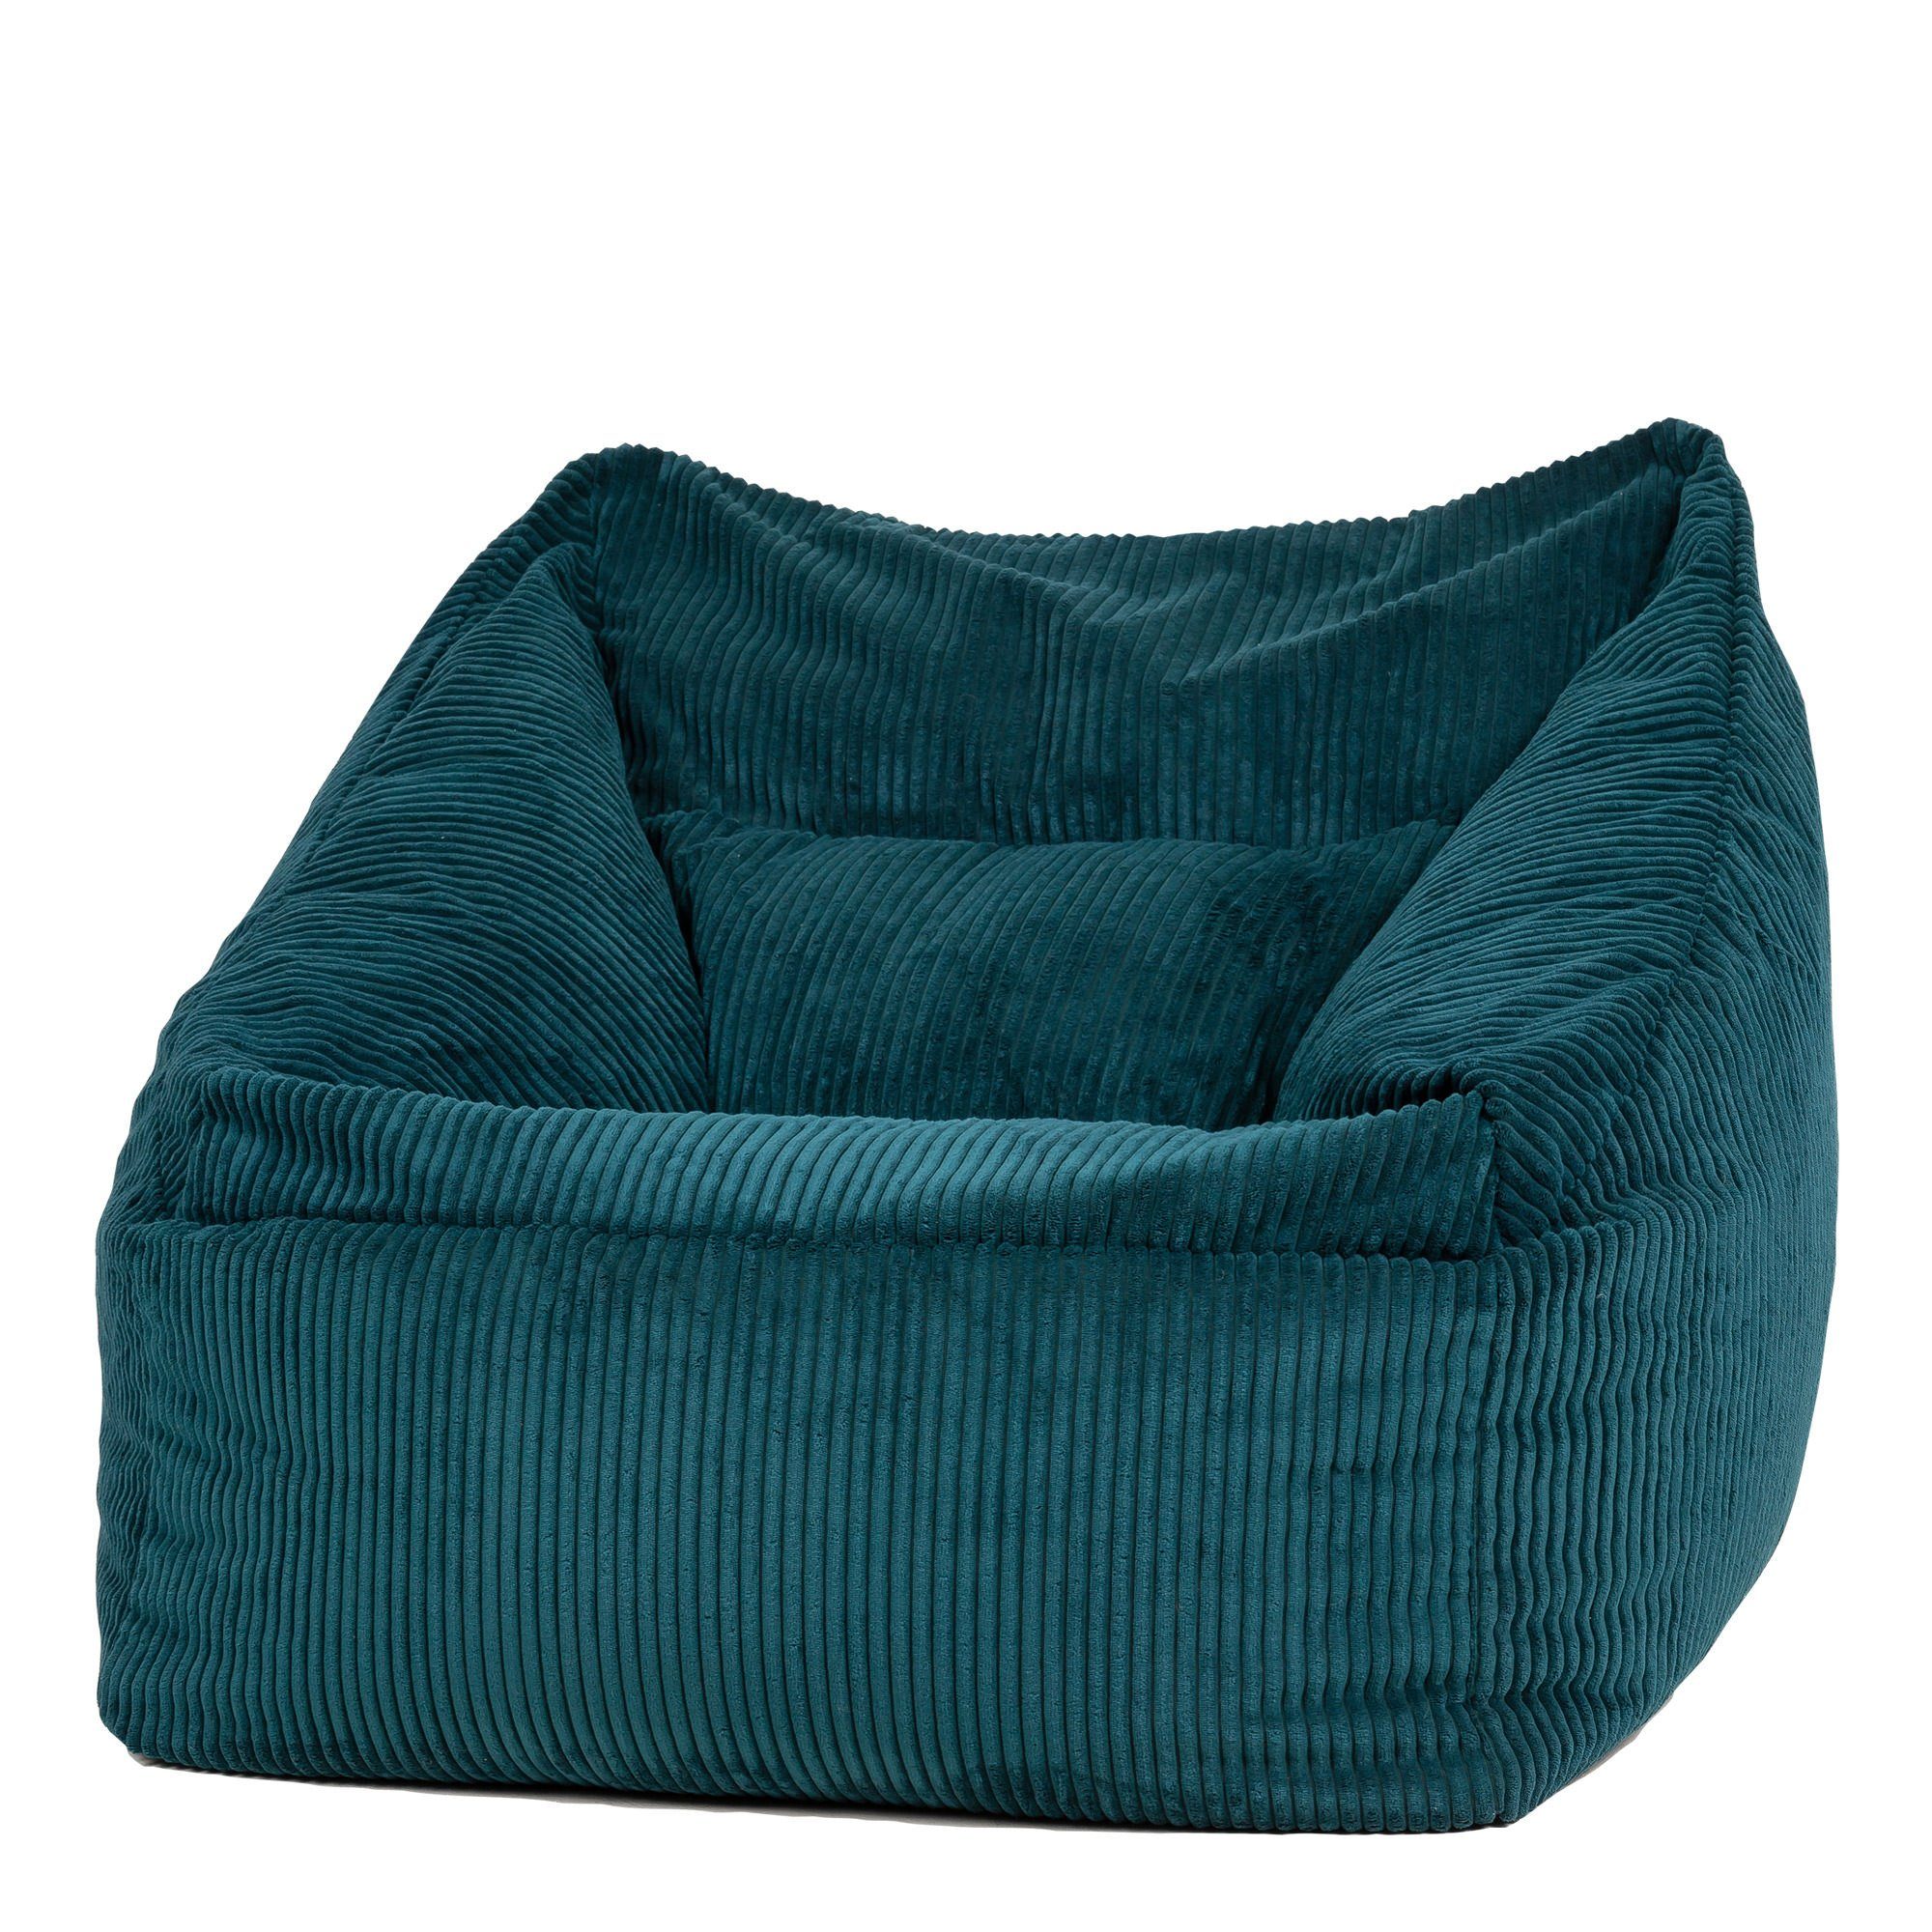 Riesen Sitzsack aus blaugrün icon „Morgan“ Sessel Sitzsack Cord